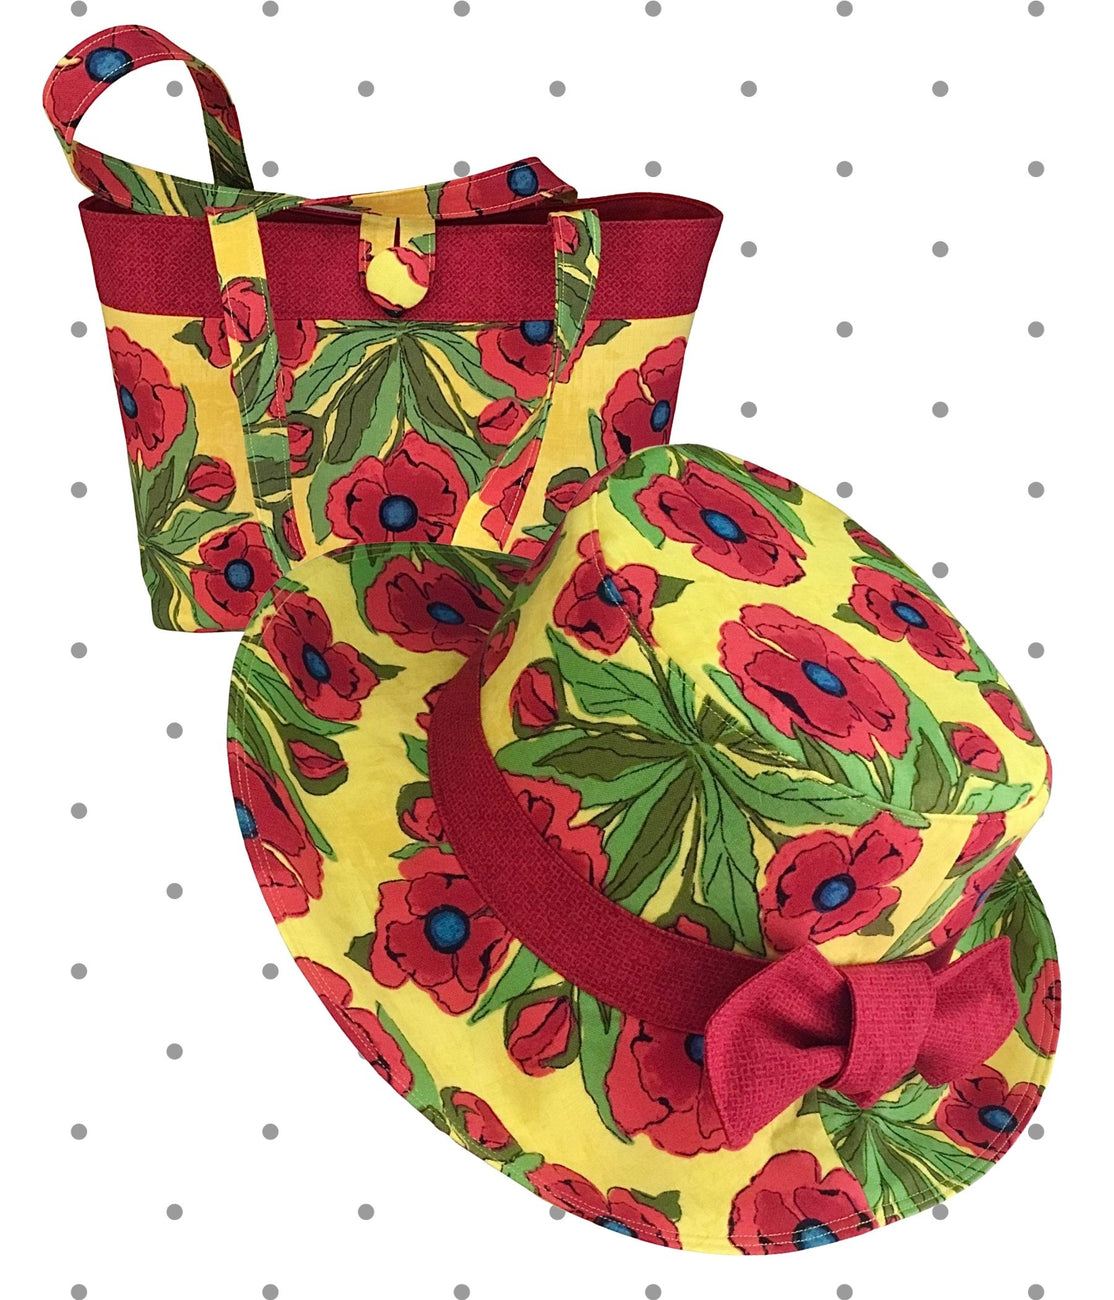 Poppin’ Poppies Bag